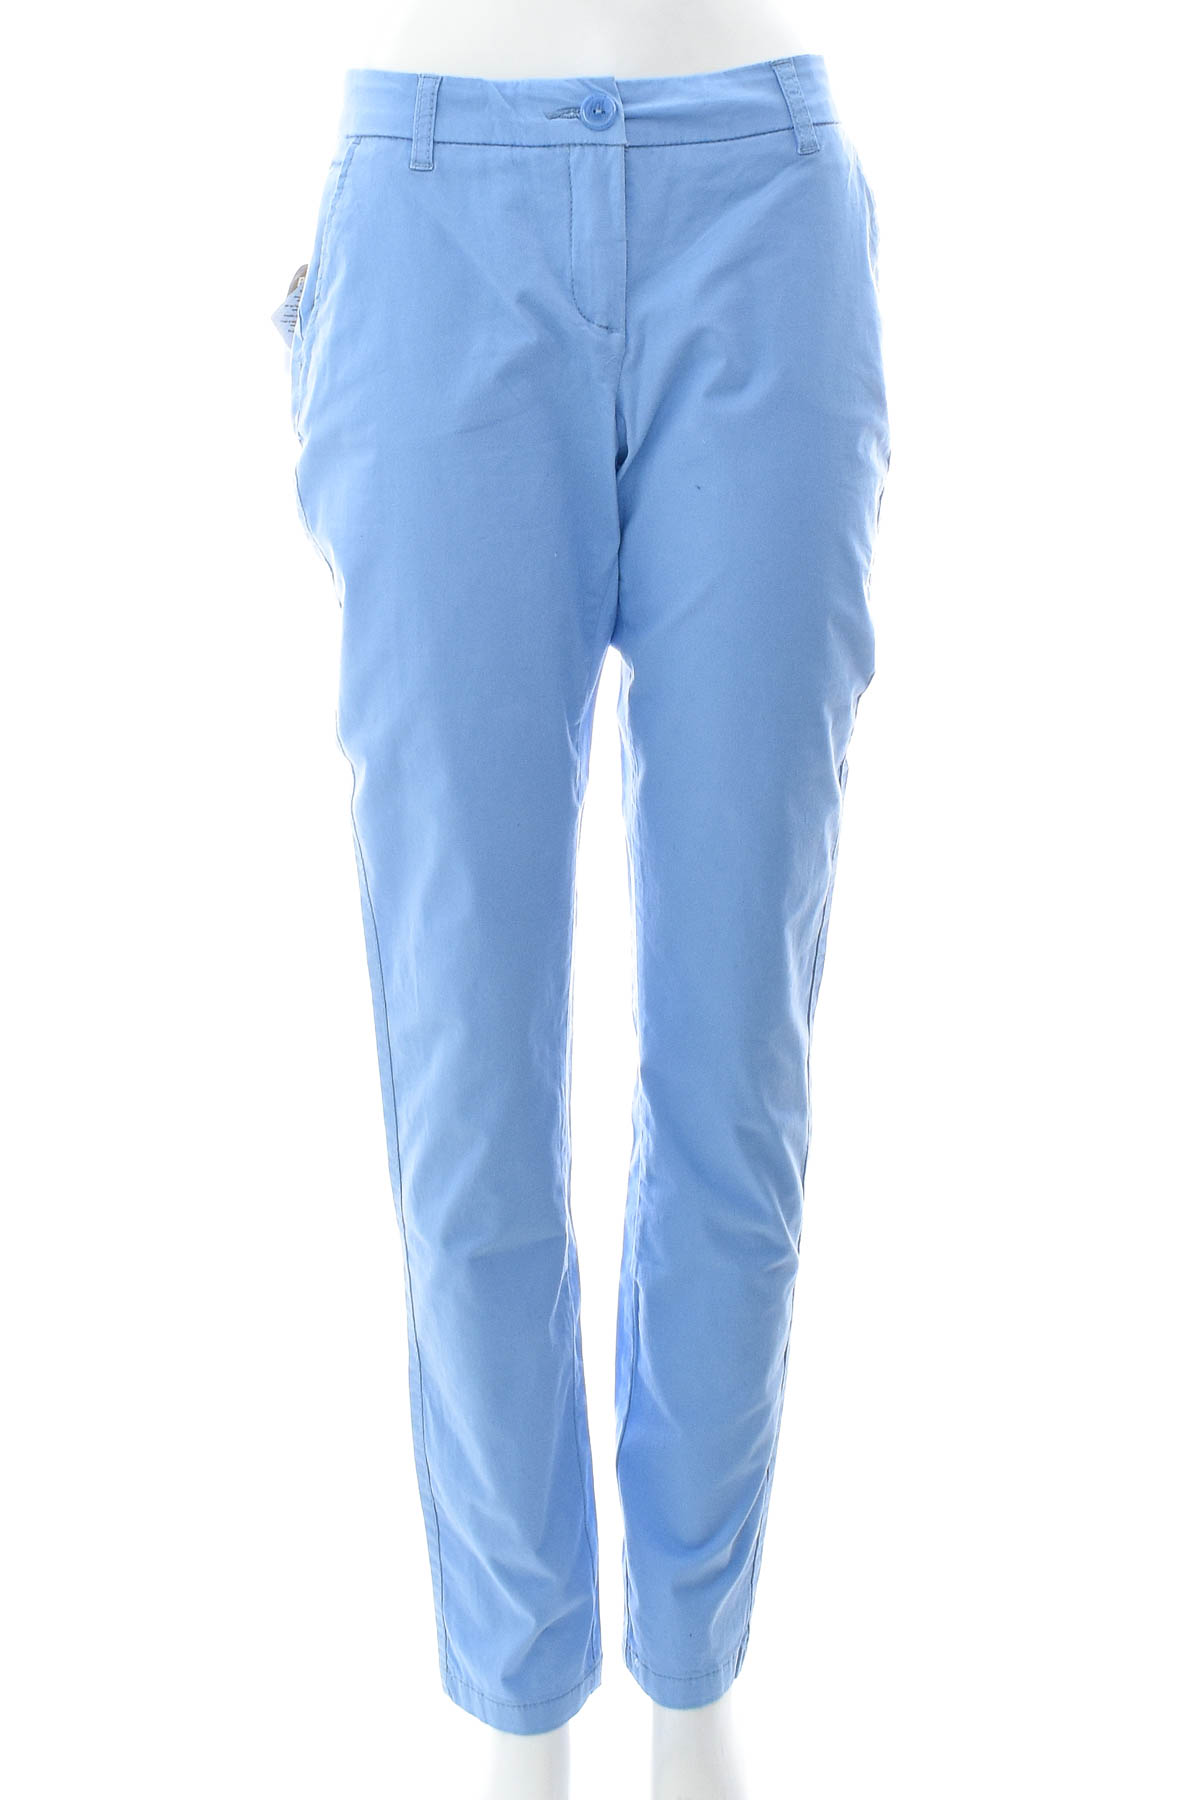 Pantaloni de damă - Blue Motion - 0